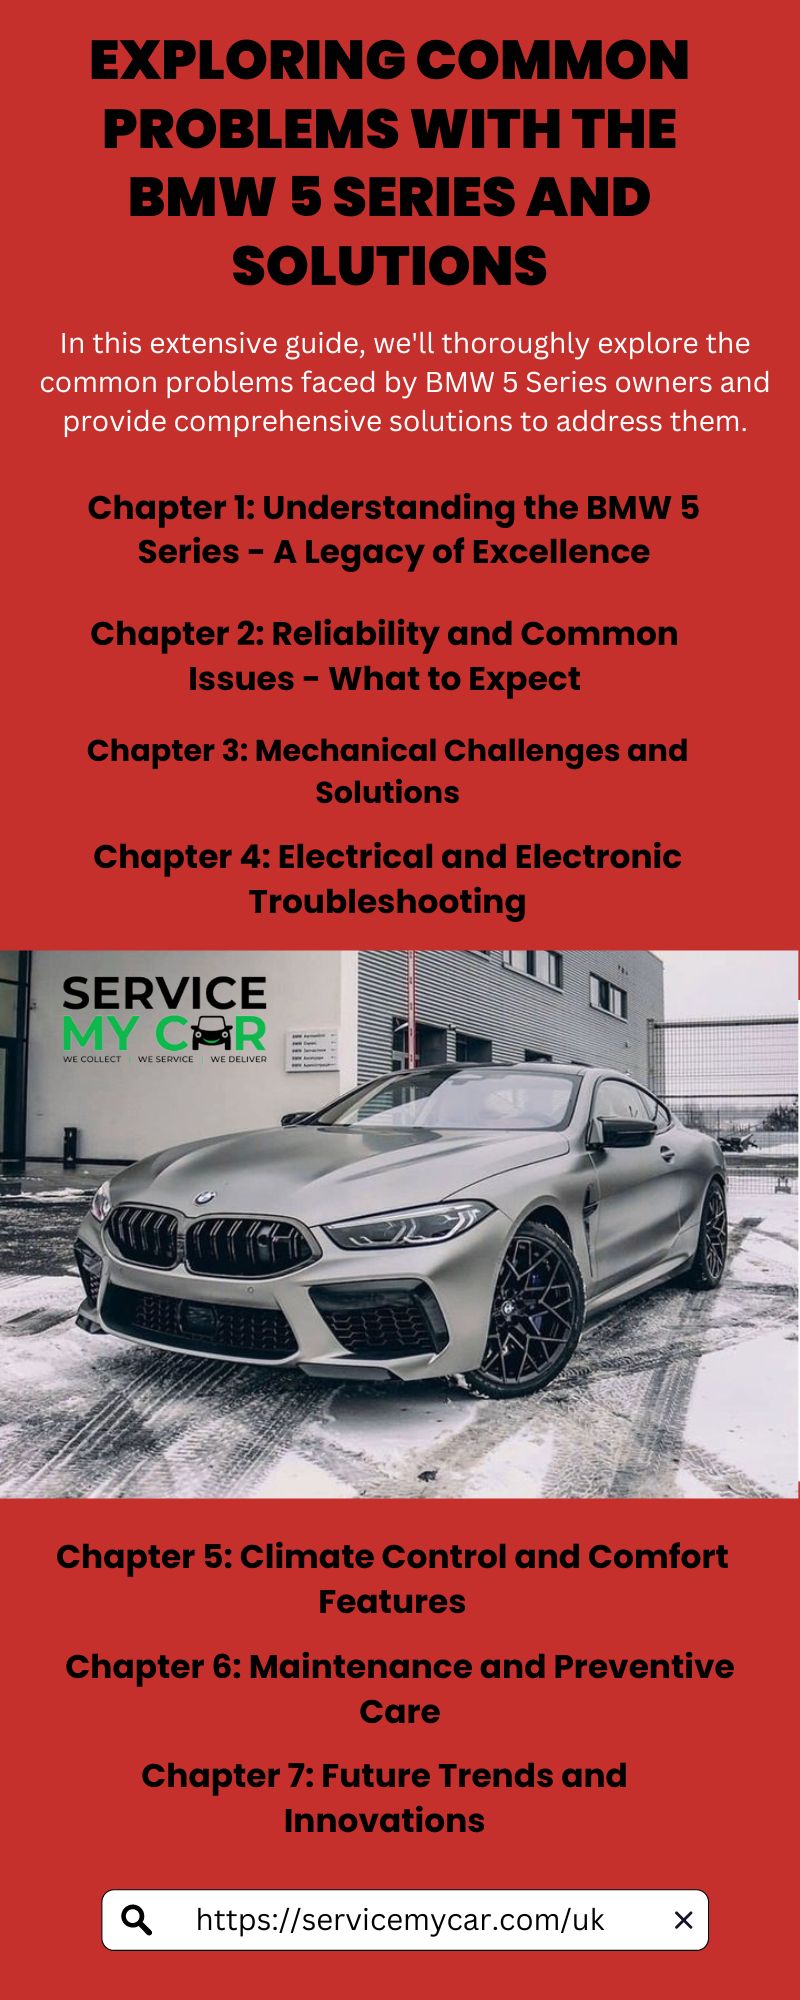 BMW 5 series info